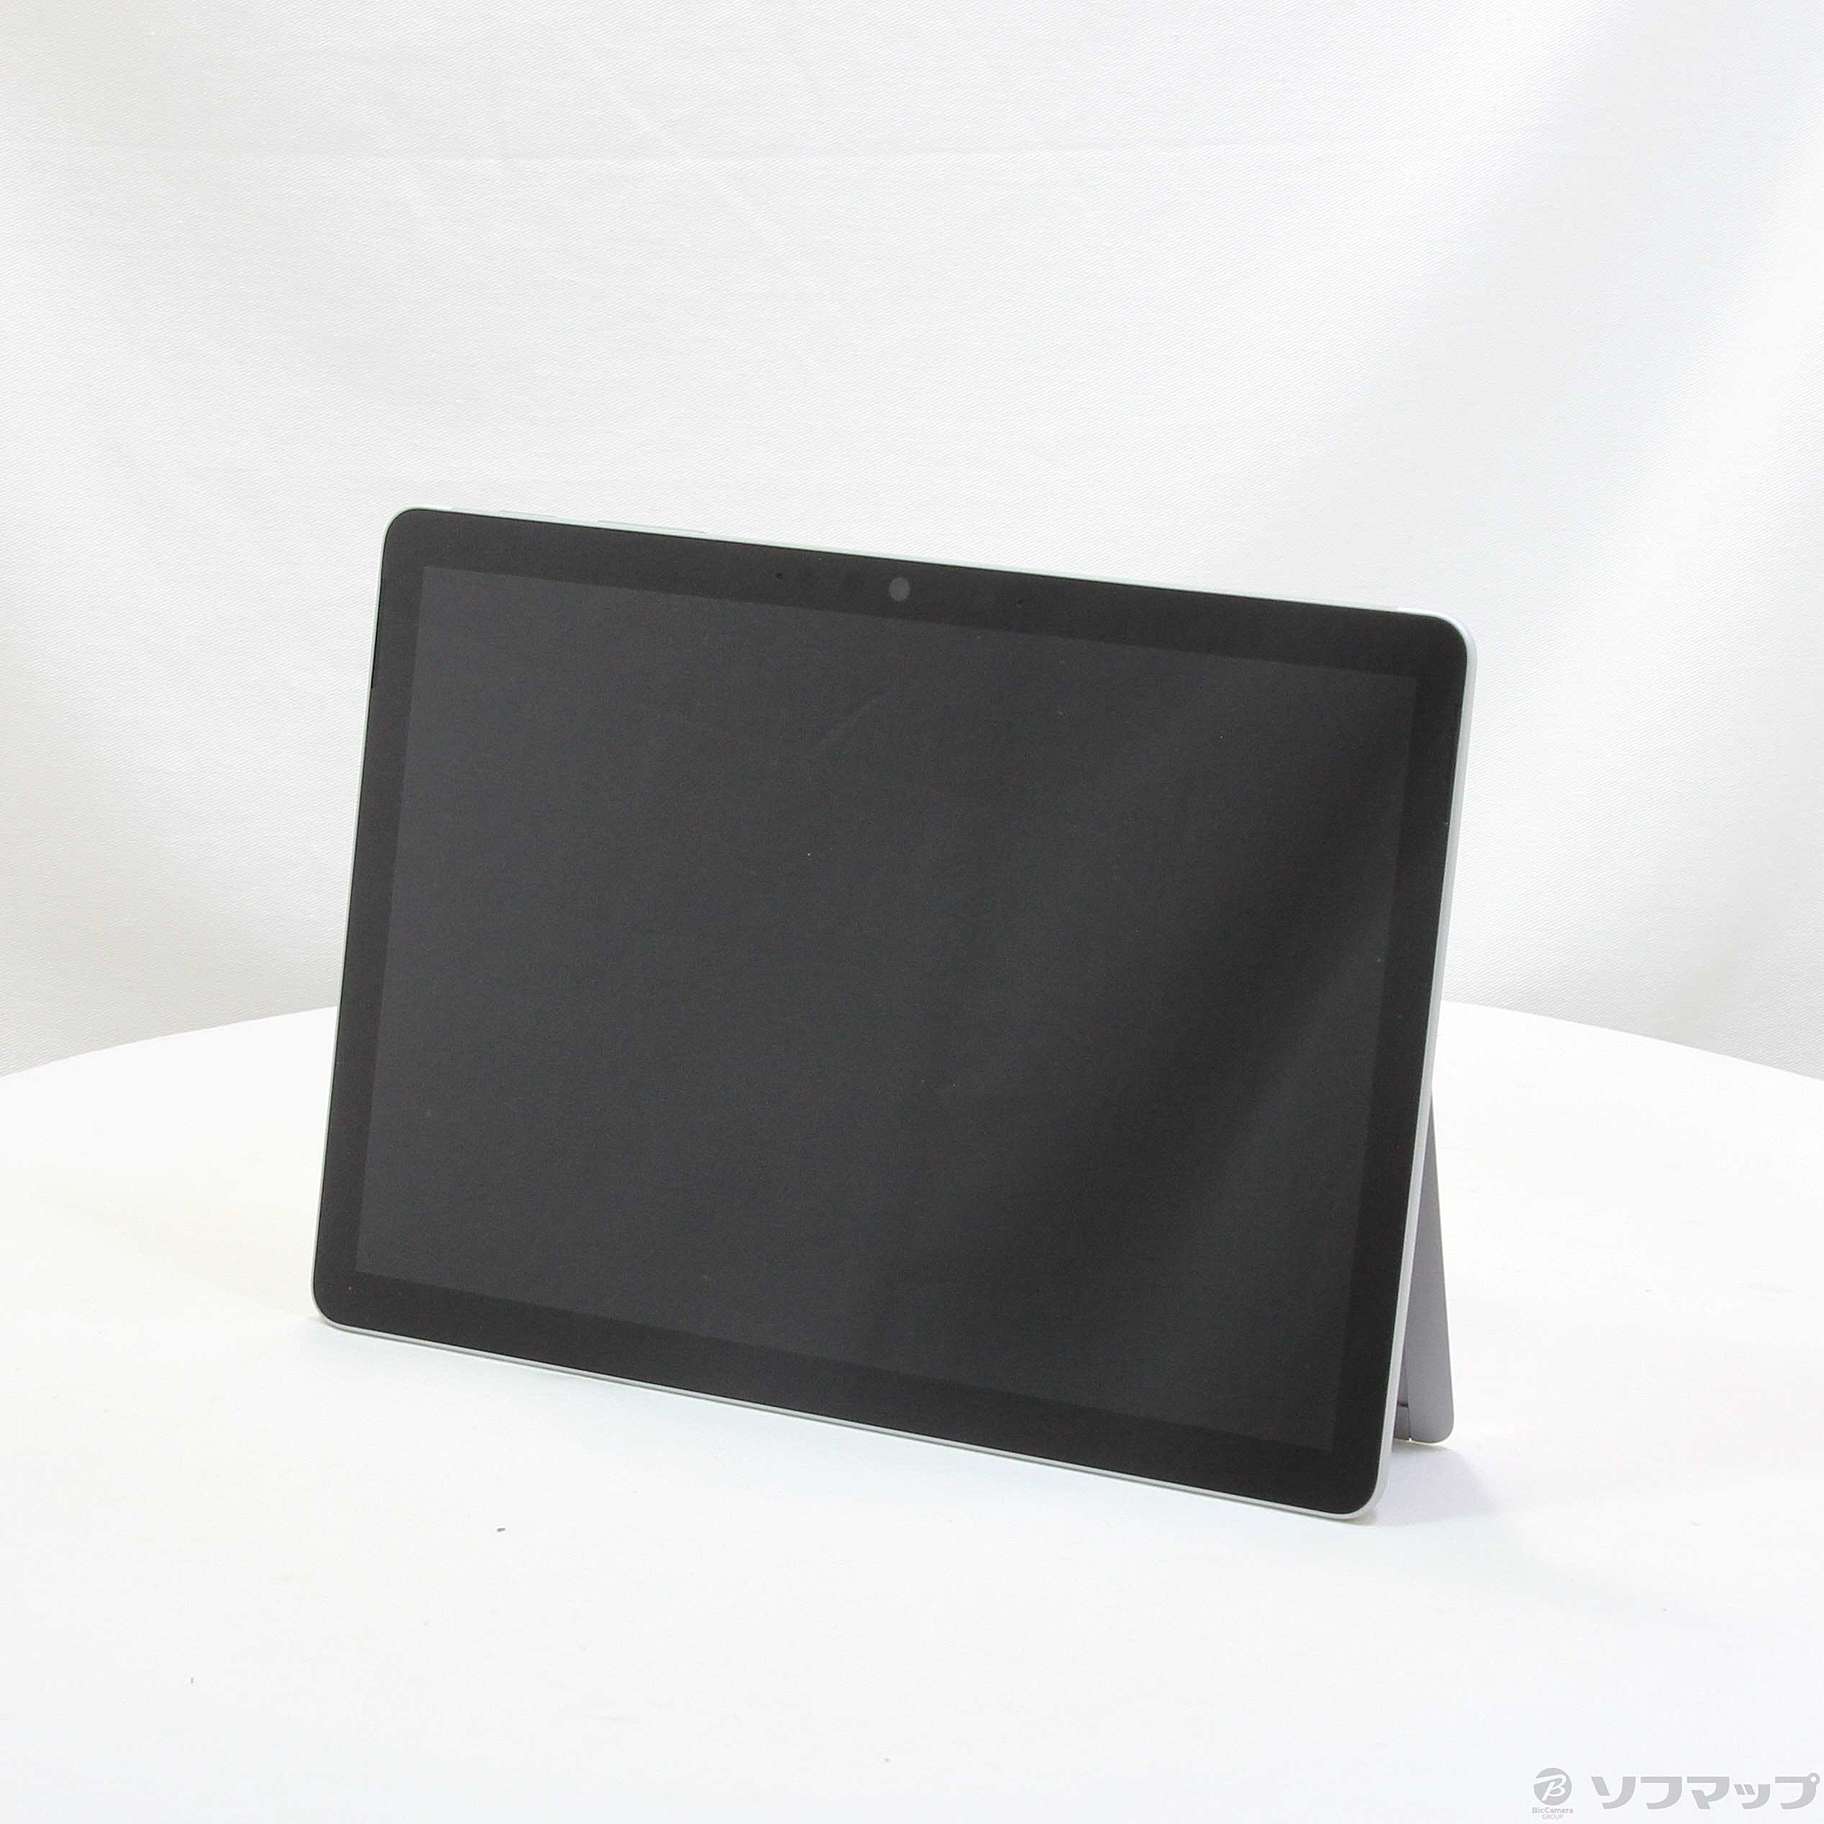 Microsoft Surface Go 3 プラチナ 8V6-00015